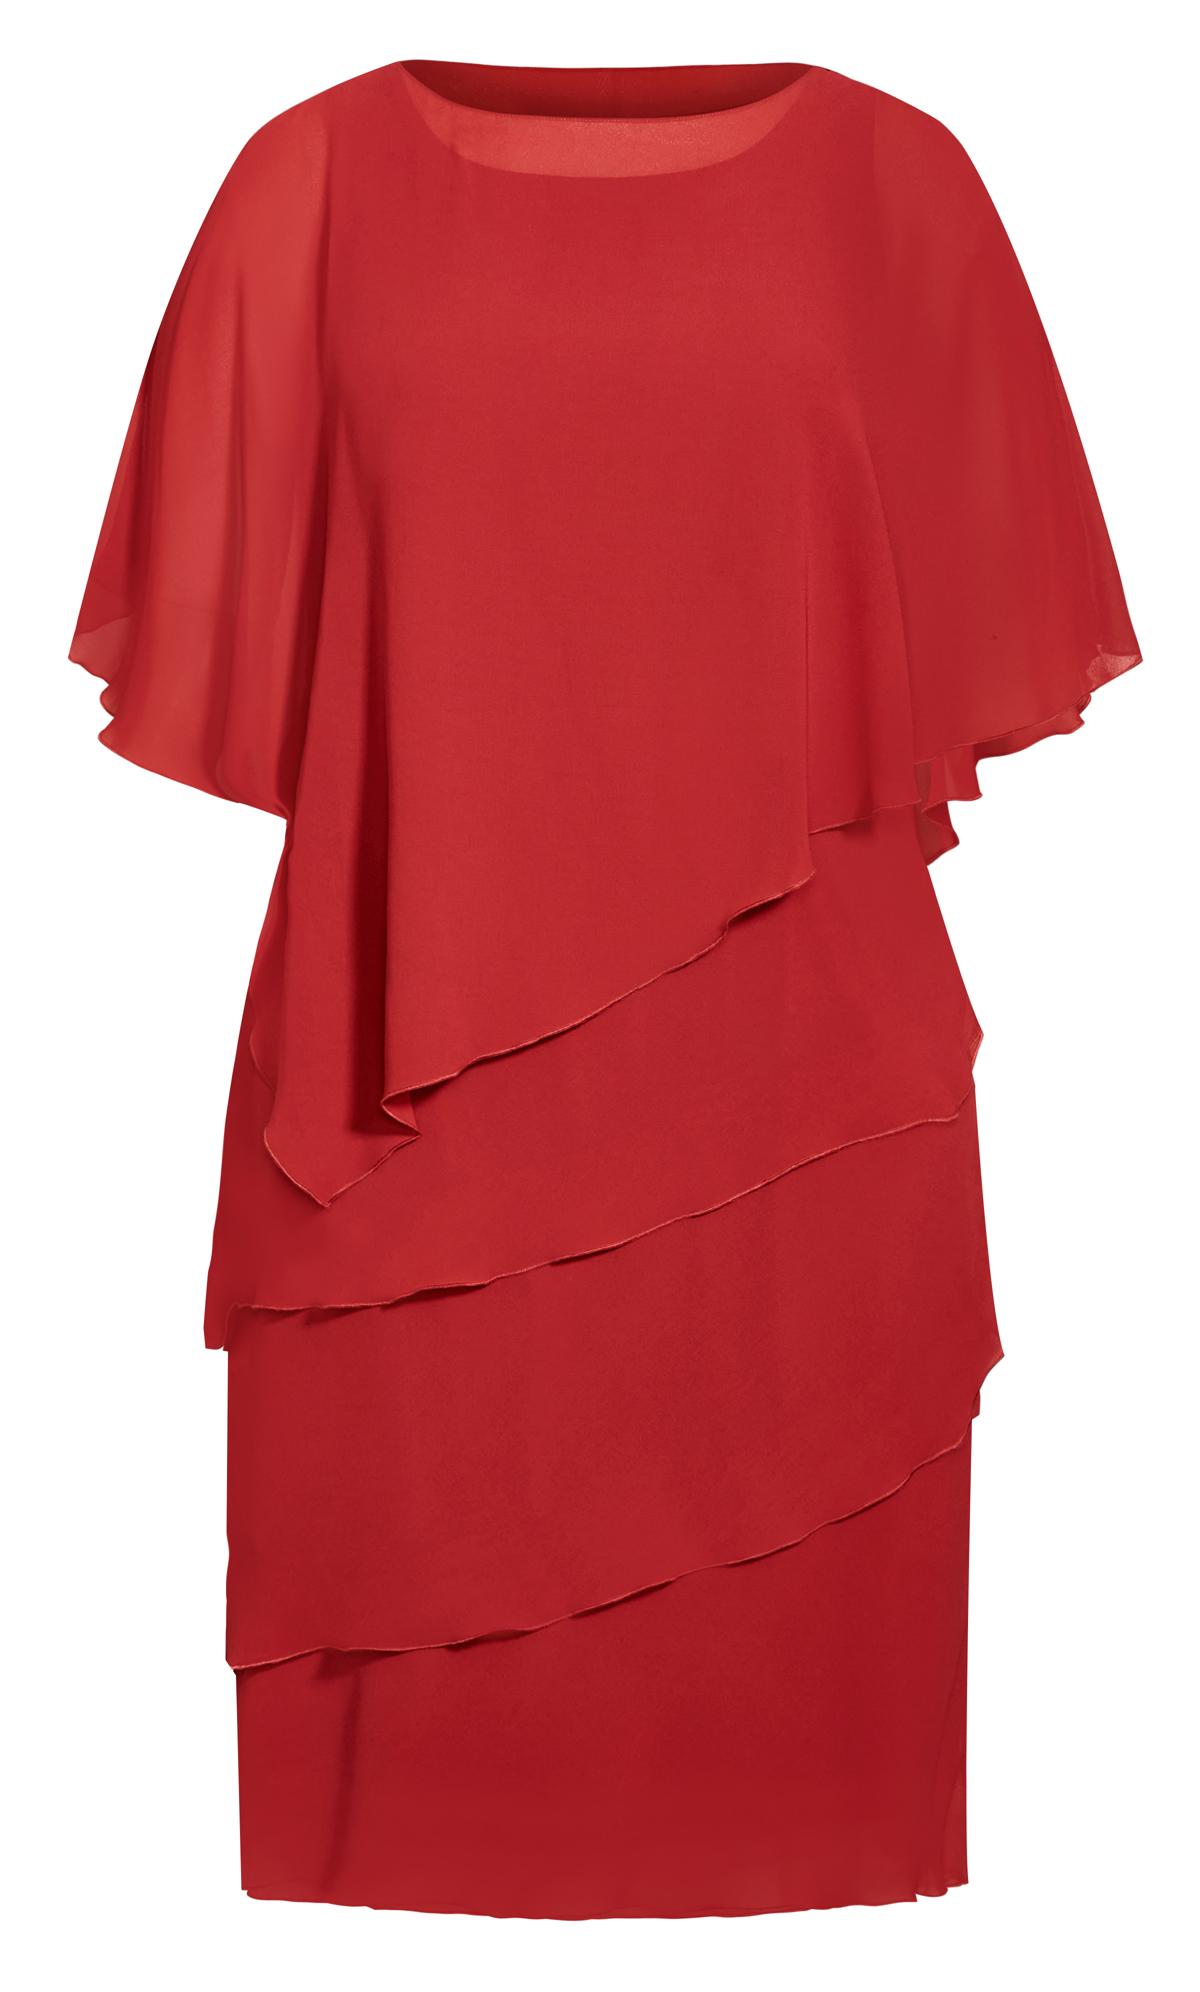 Evans Red Frill Dress 2